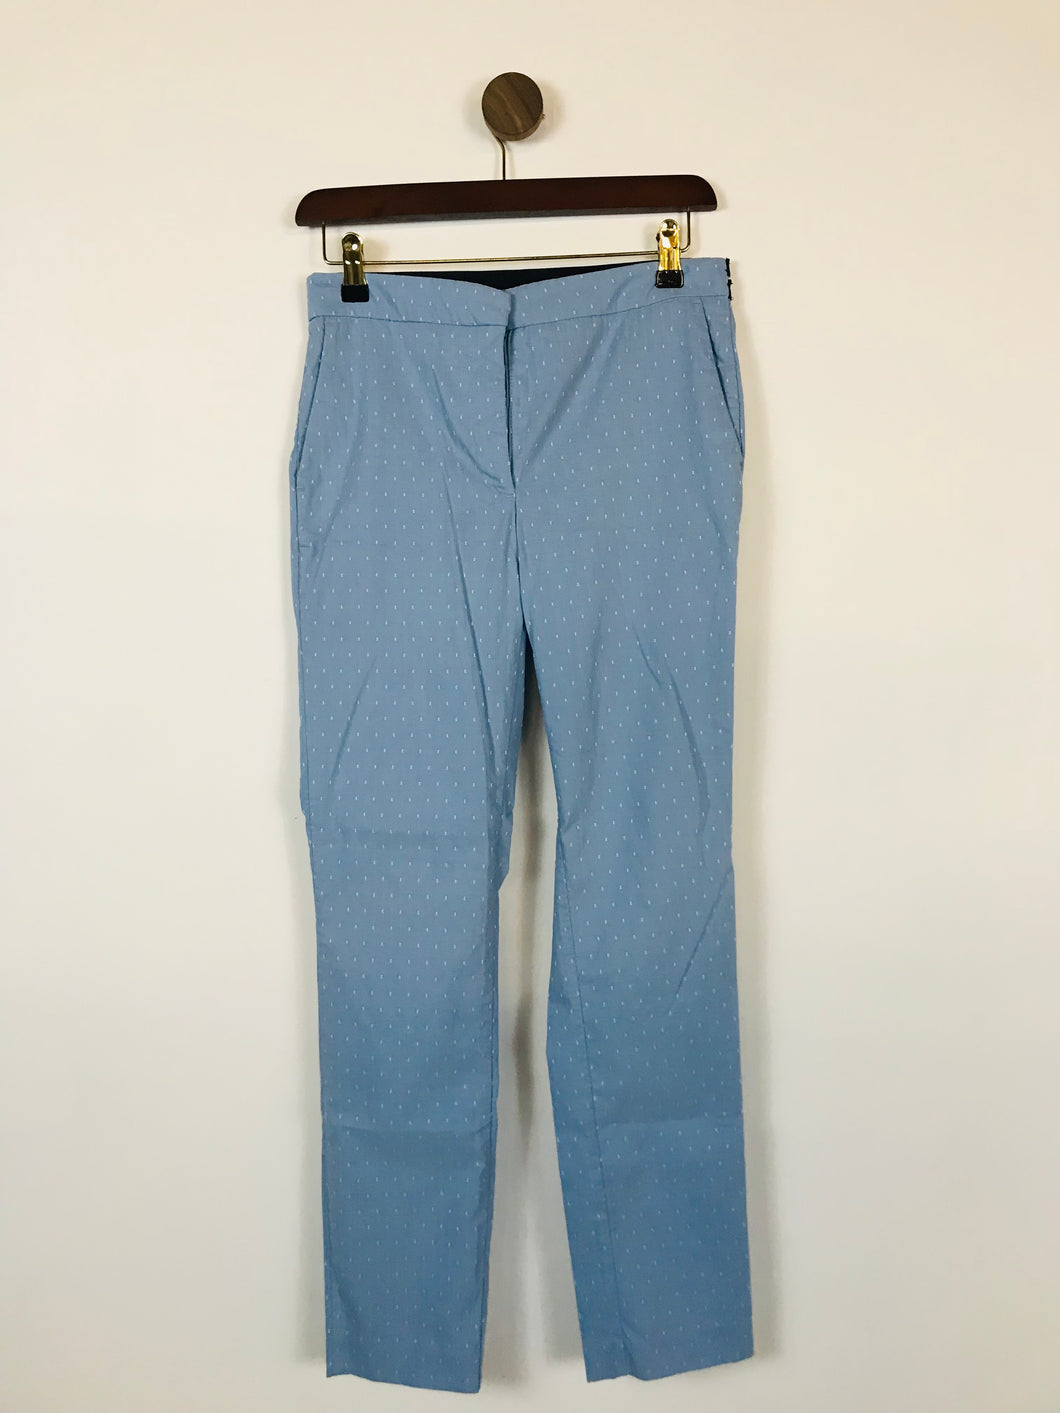 Zara Women's Smart Chinos Trousers | M UK10-12 | Blue